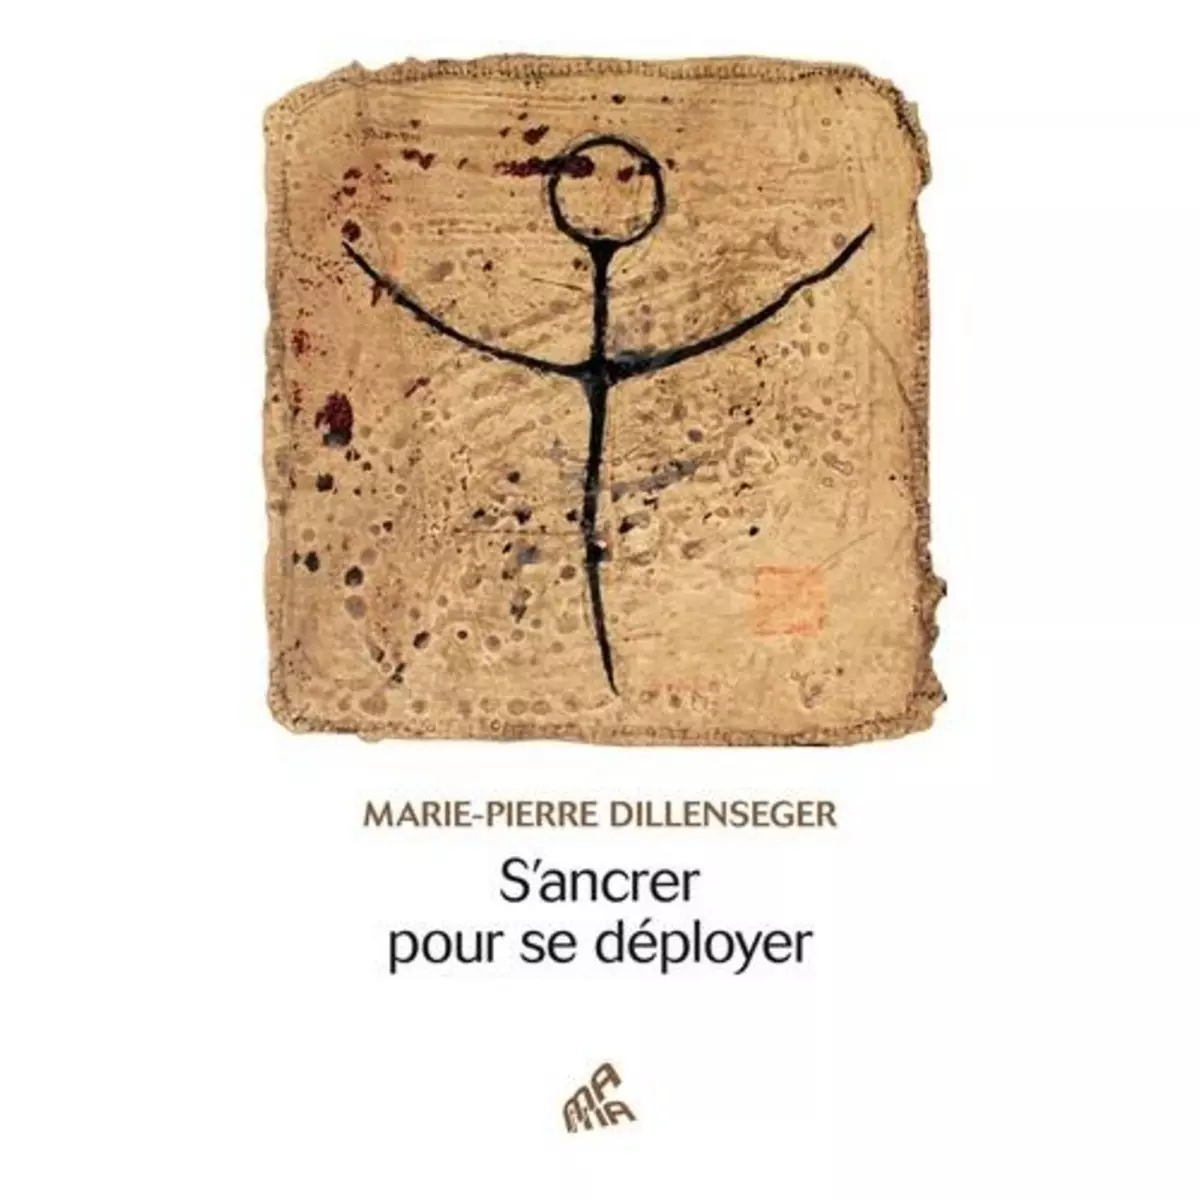  S'ANCRER POUR SE DEPLOYER, Dillenseger Marie-Pierre